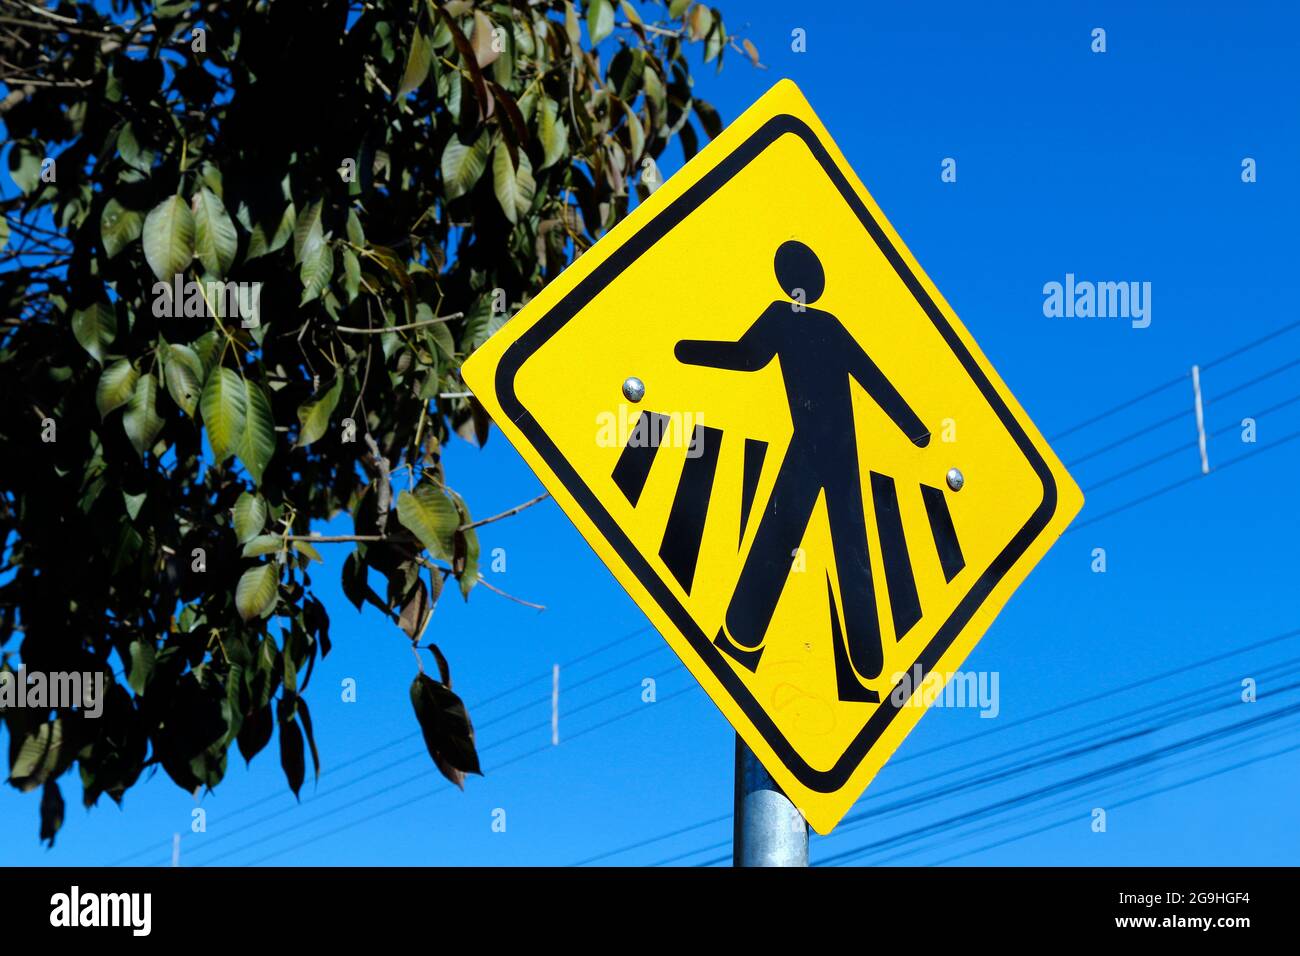 pedestrian crossing - yellow traffic sign signaling crosswalk Stock Photo